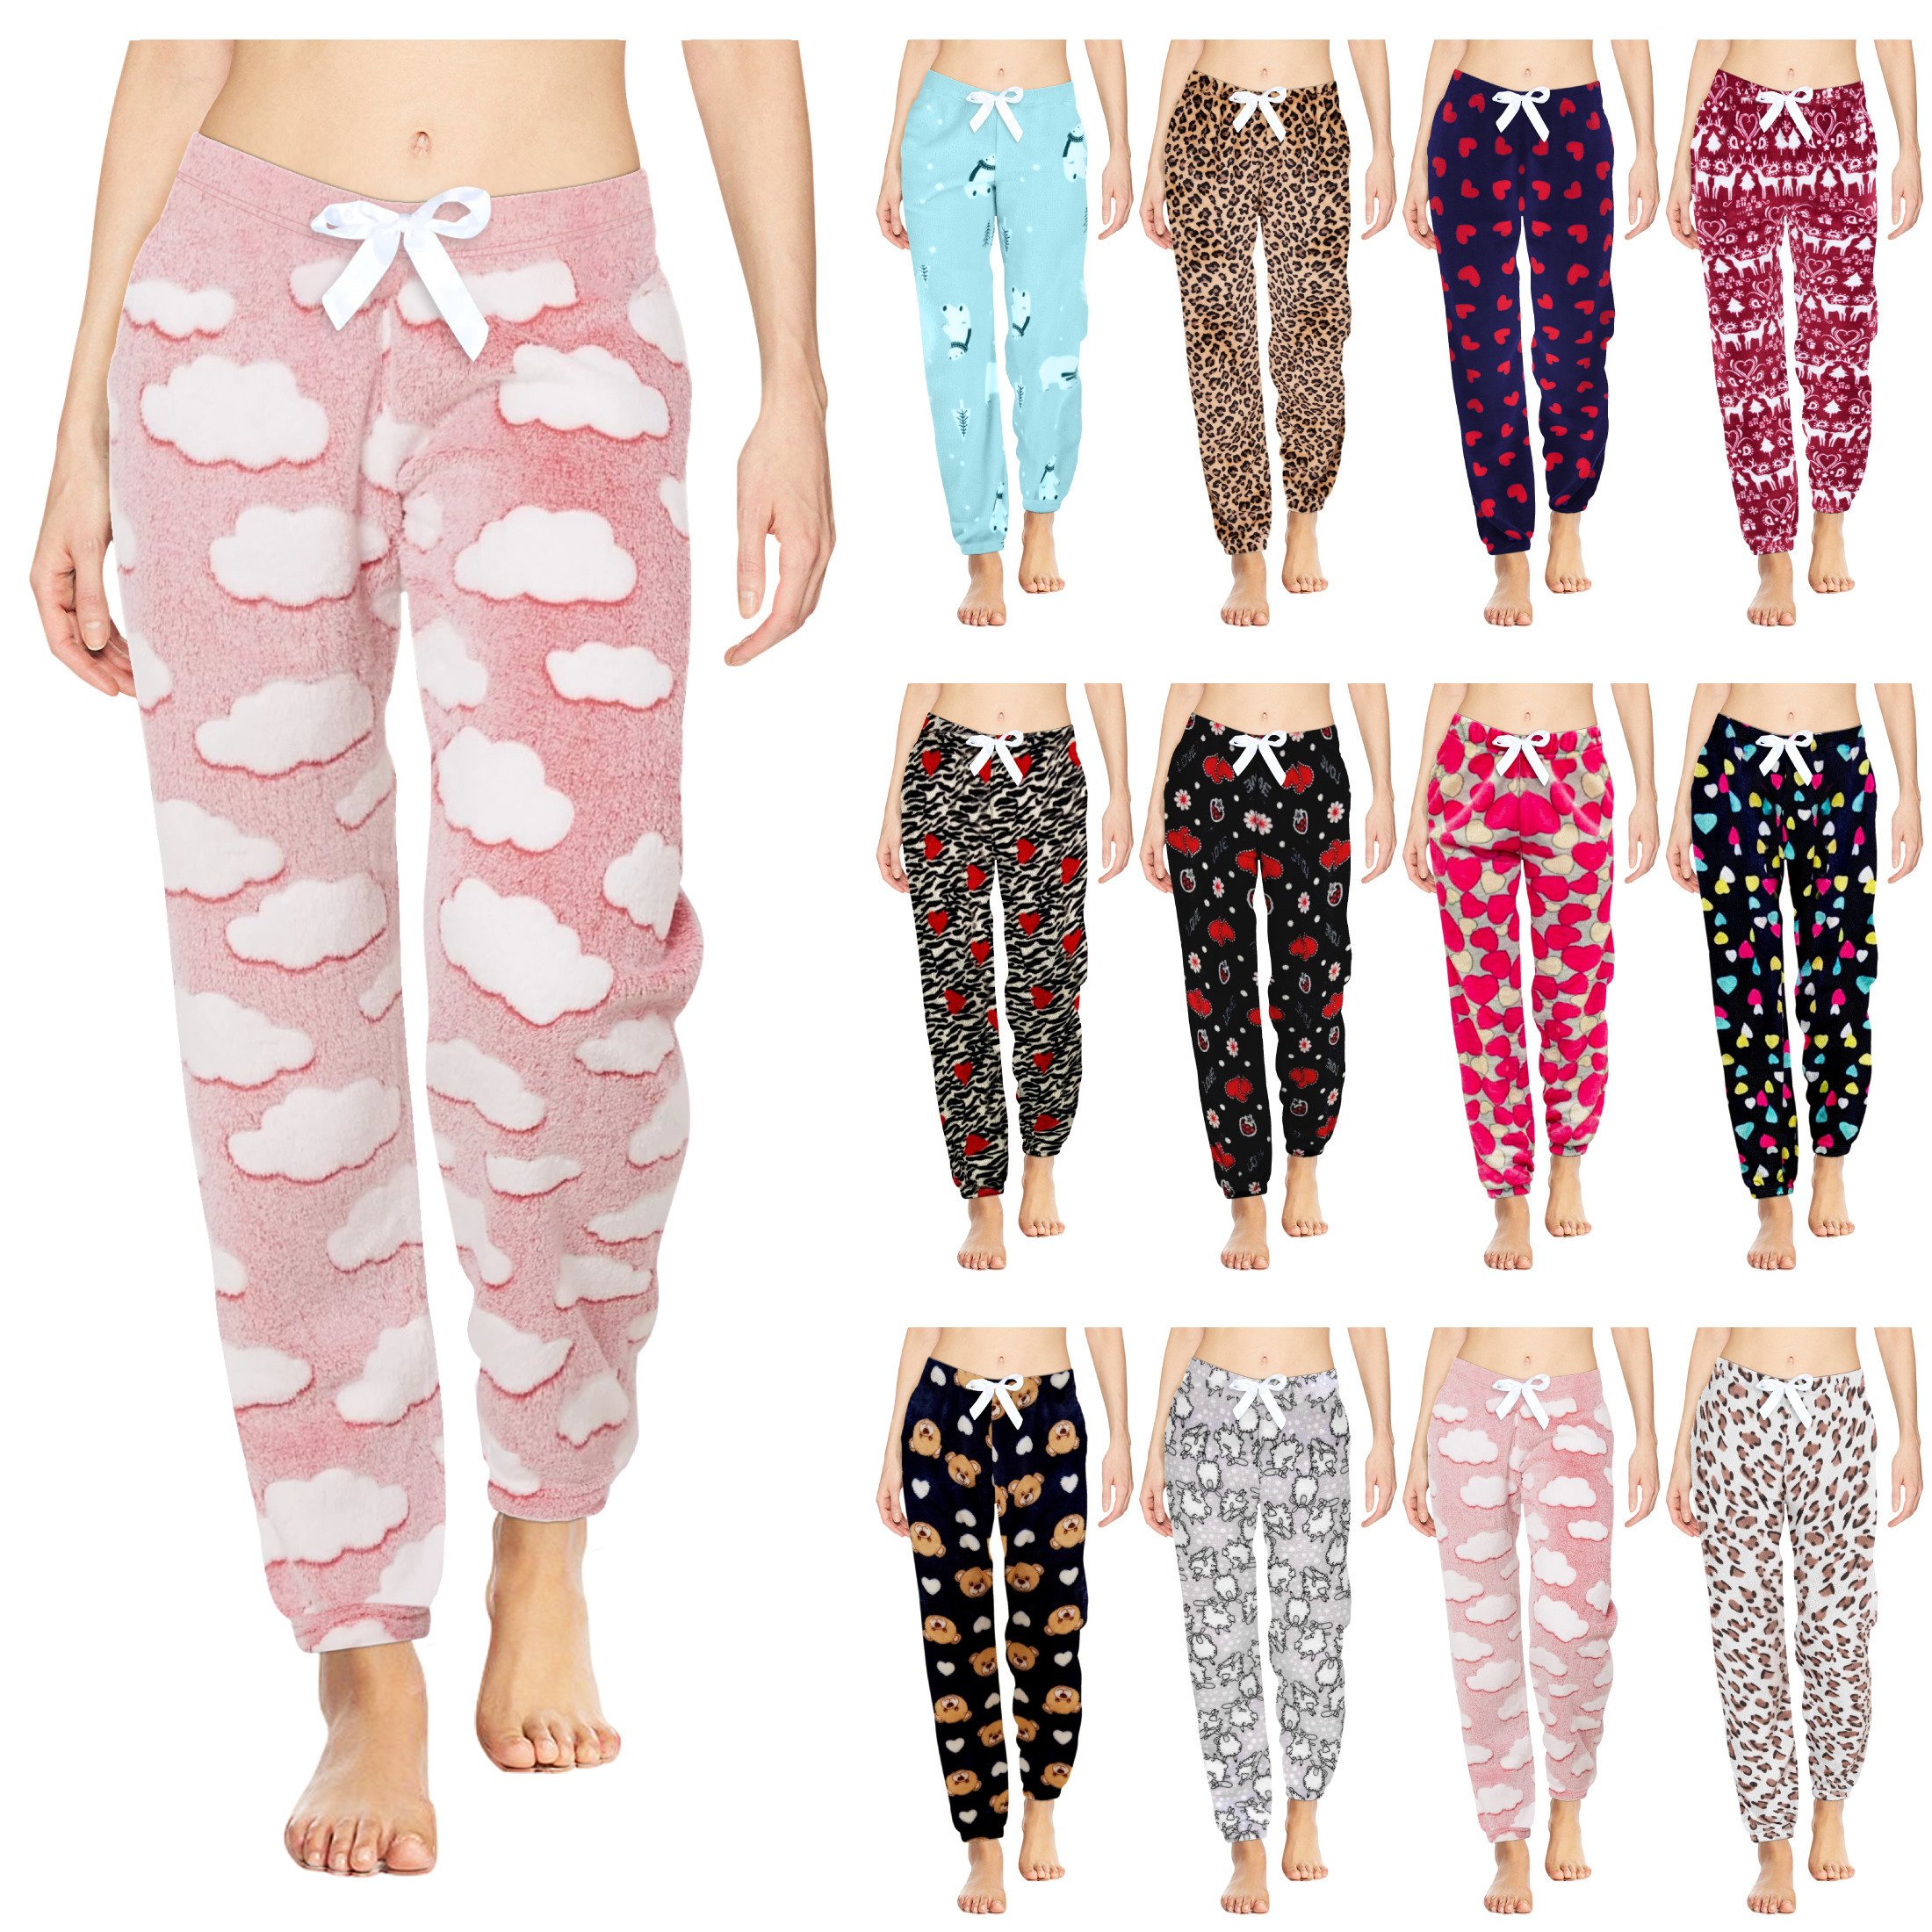 3-Pack: Women's Ultra-Plush Micro Fleece Fuzzy Pajama Pants - Print, X-Large